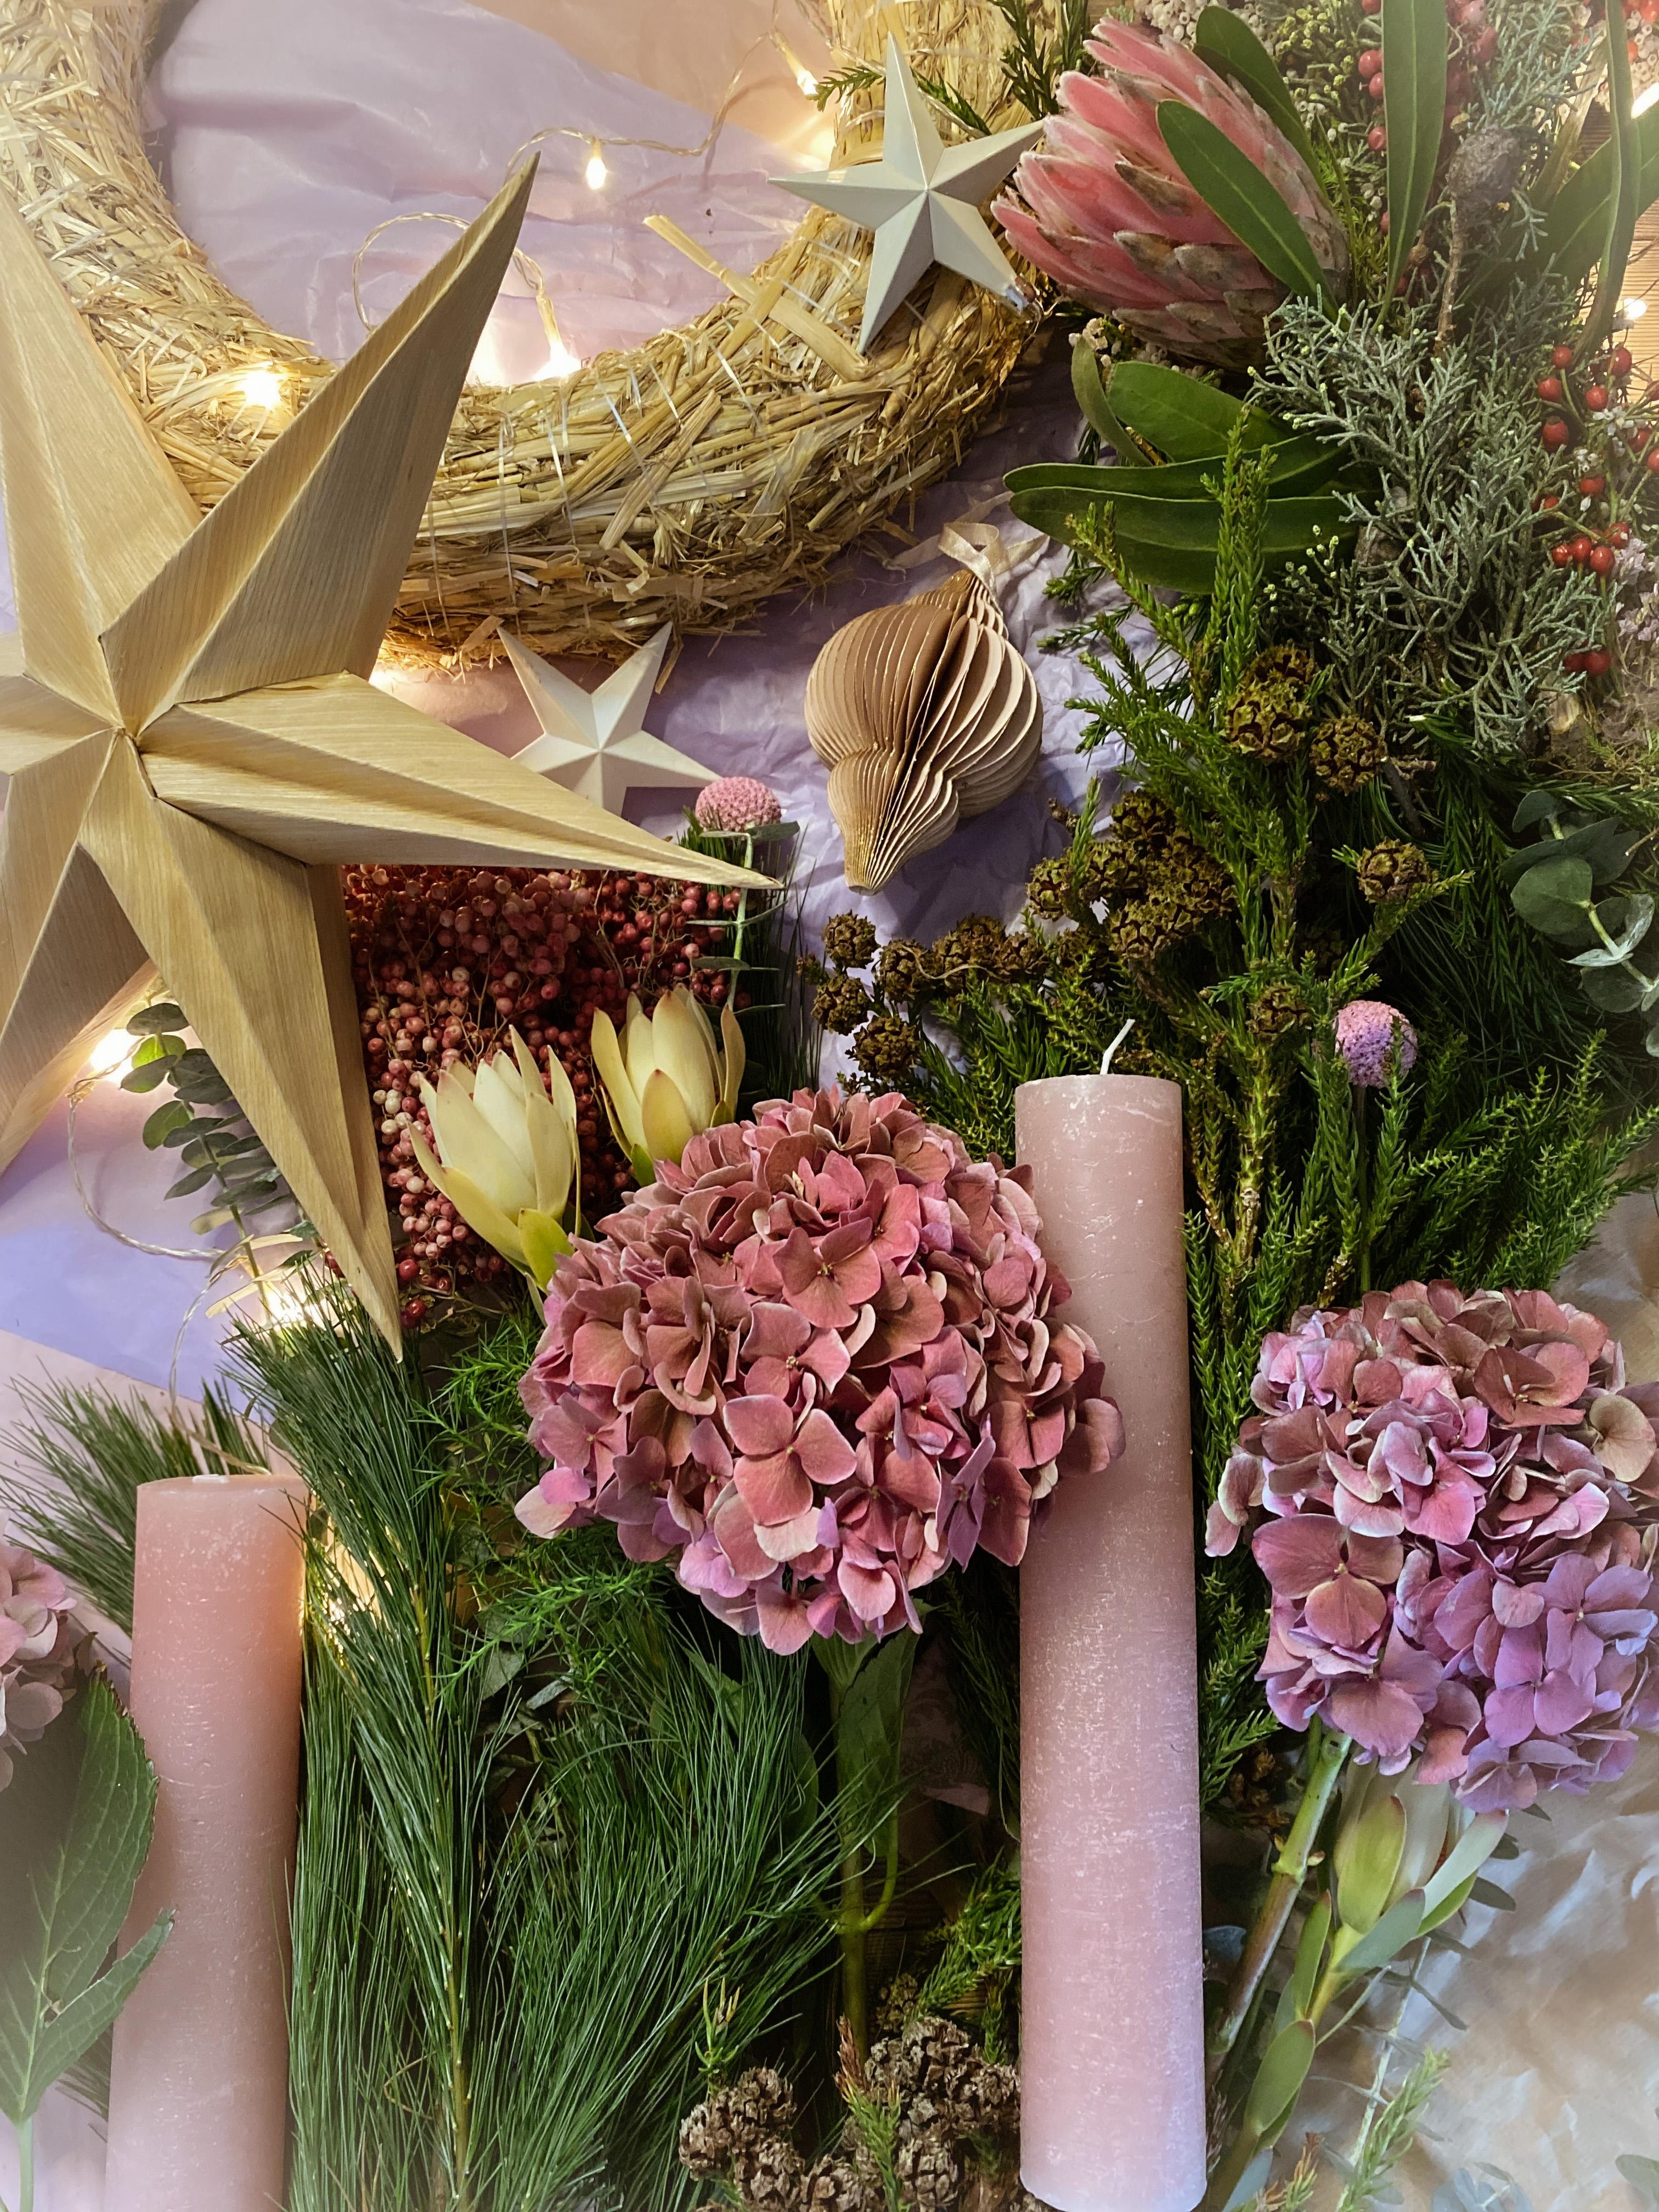 Adventsprep
#advent#wreath#tannenduft#christmasiscoming#details